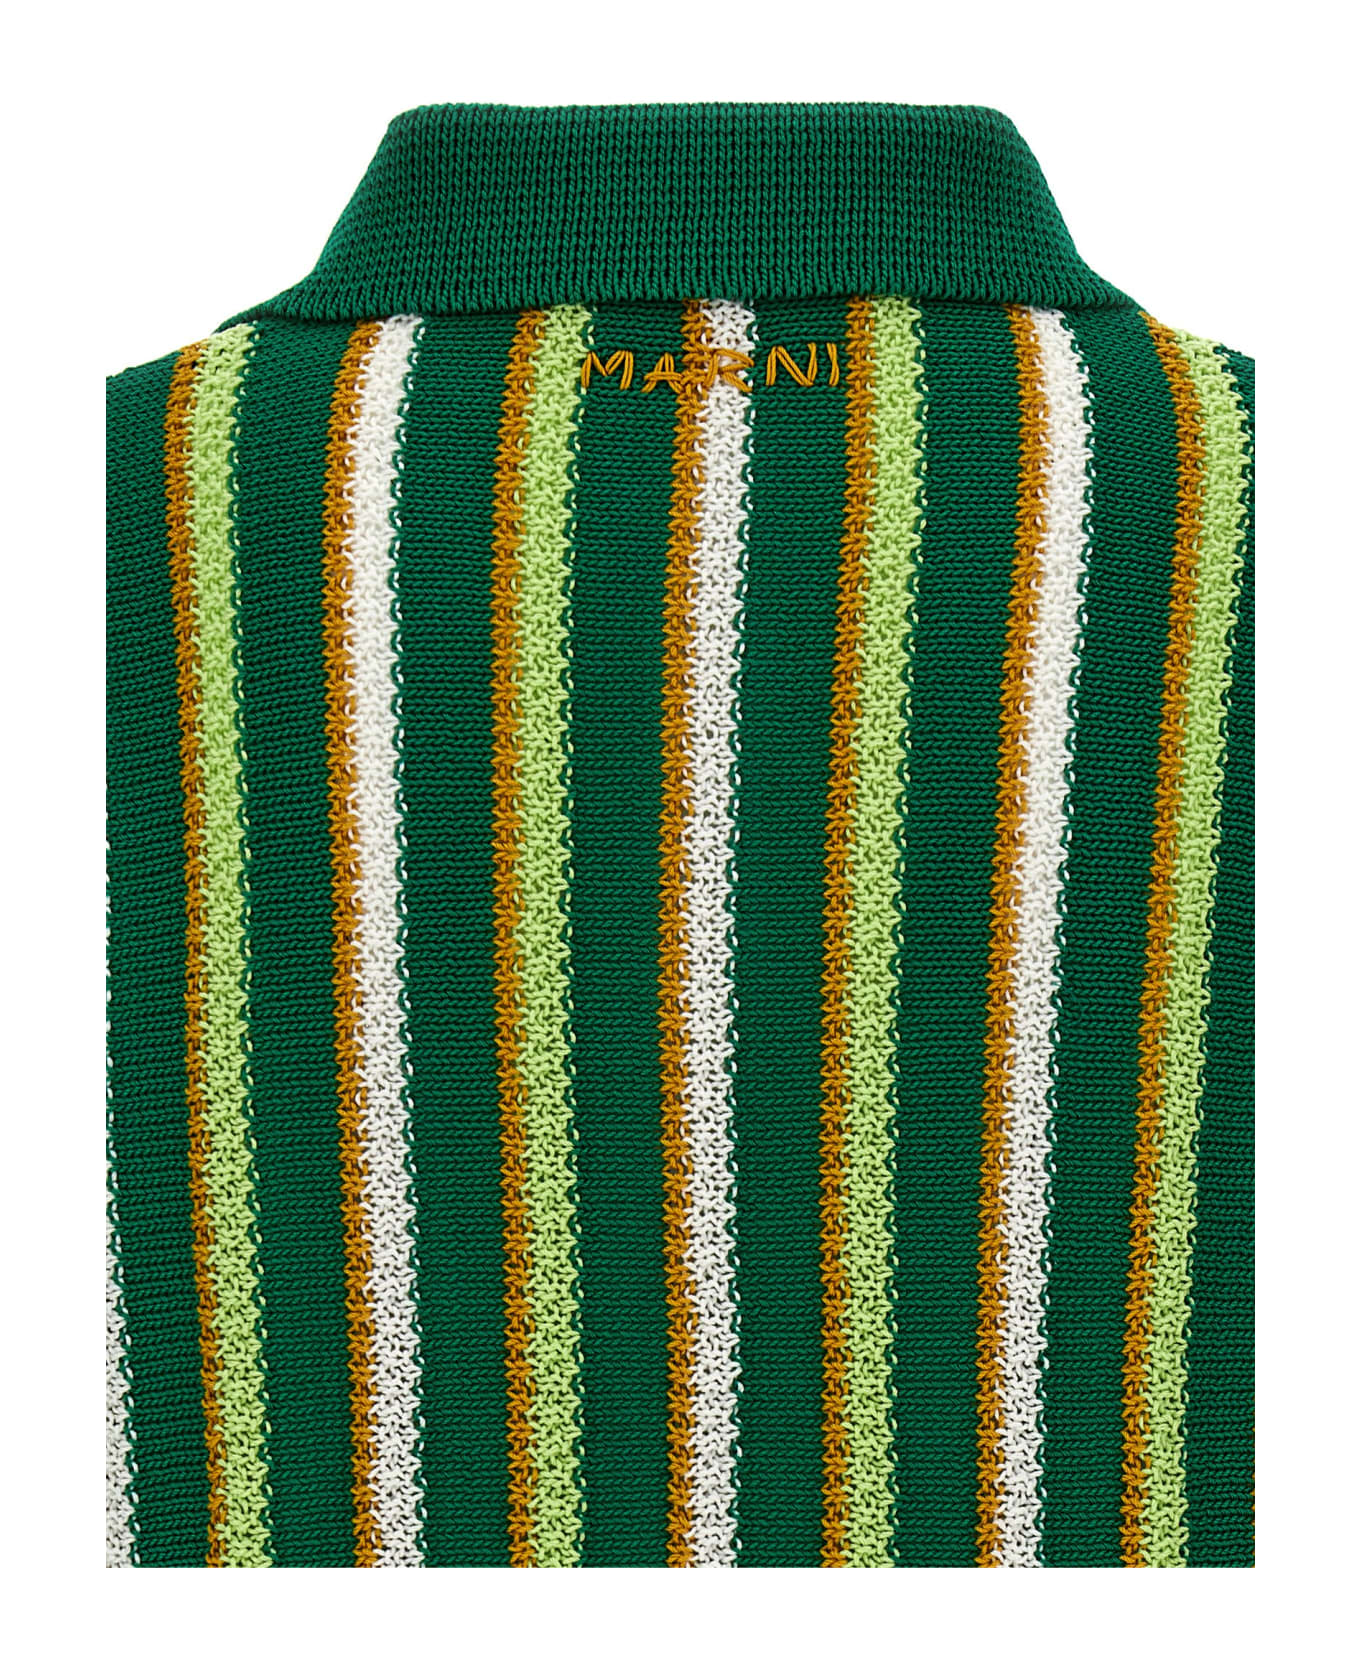 Marni Striped Polo Shirt - Green